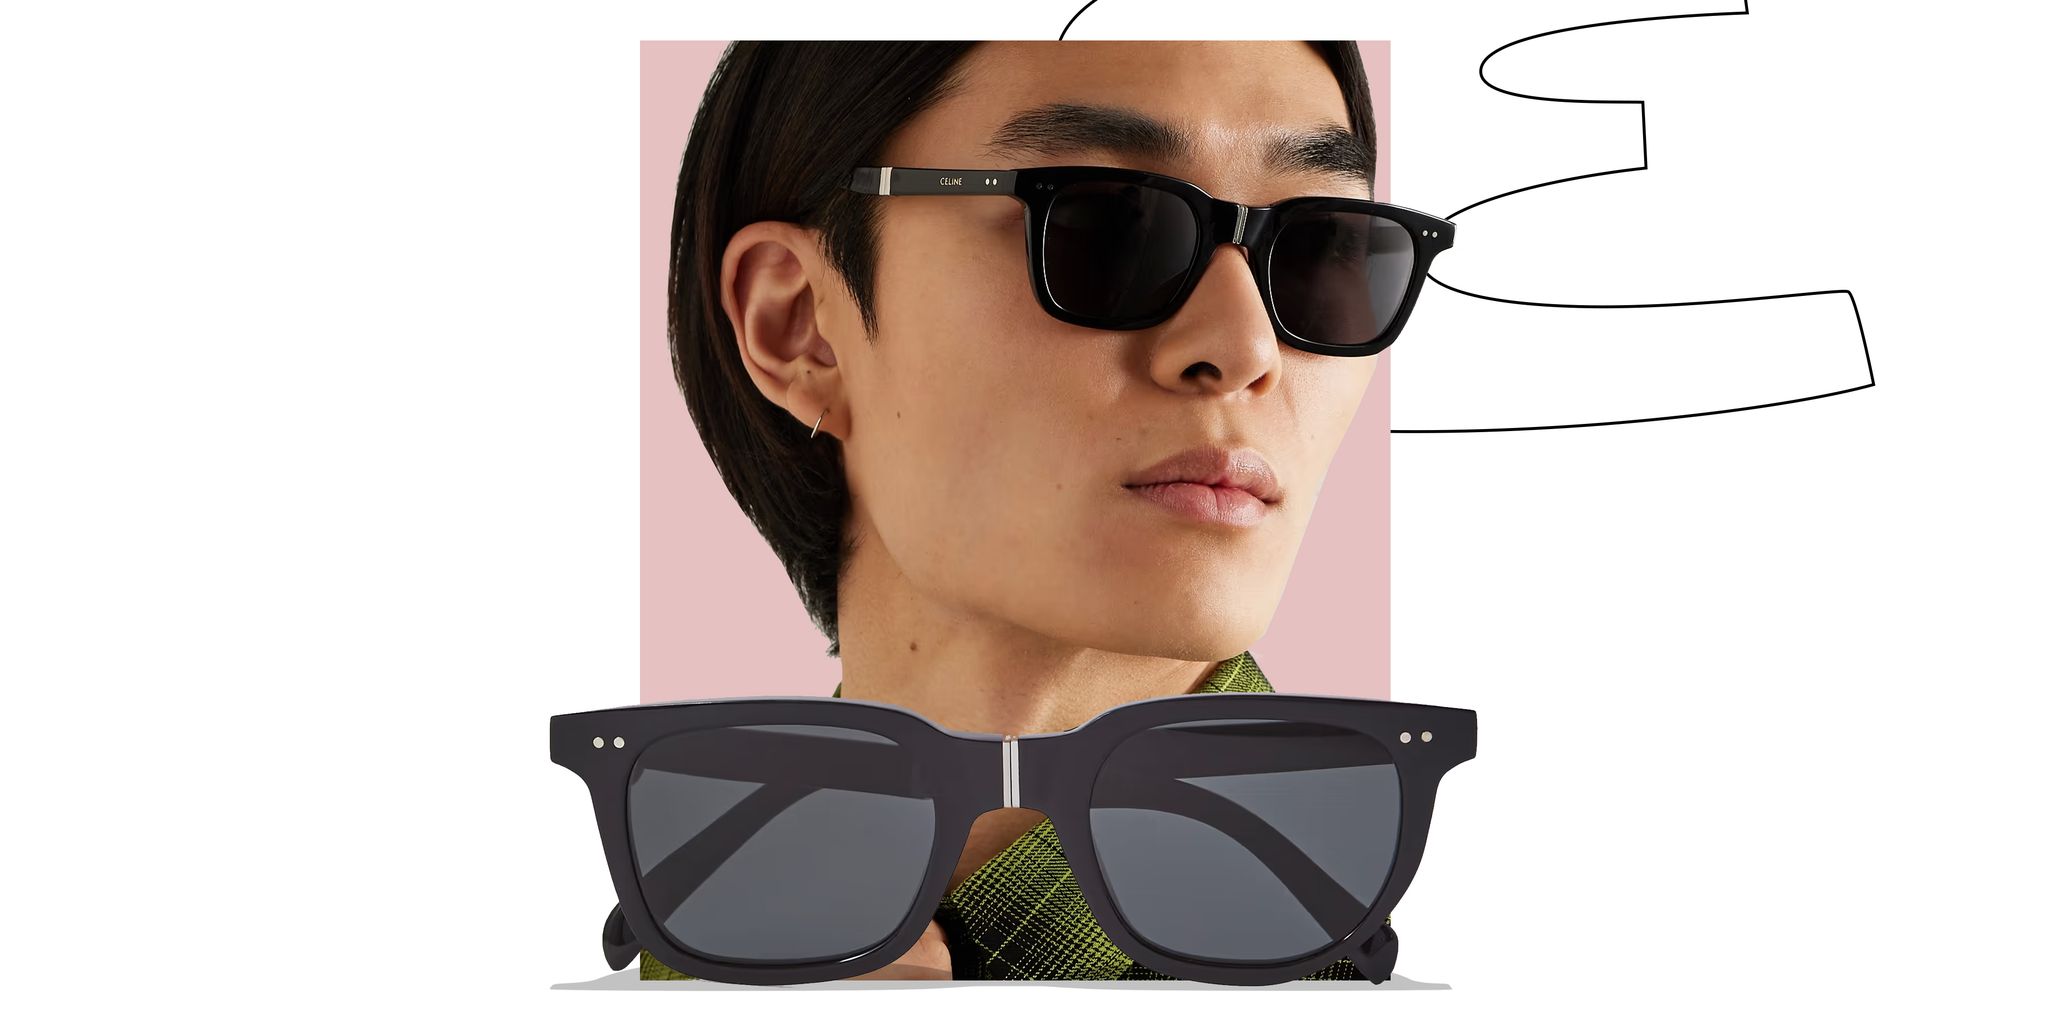 Retro Polarized Half Frame Sunglasses For Men And Women Ideal For